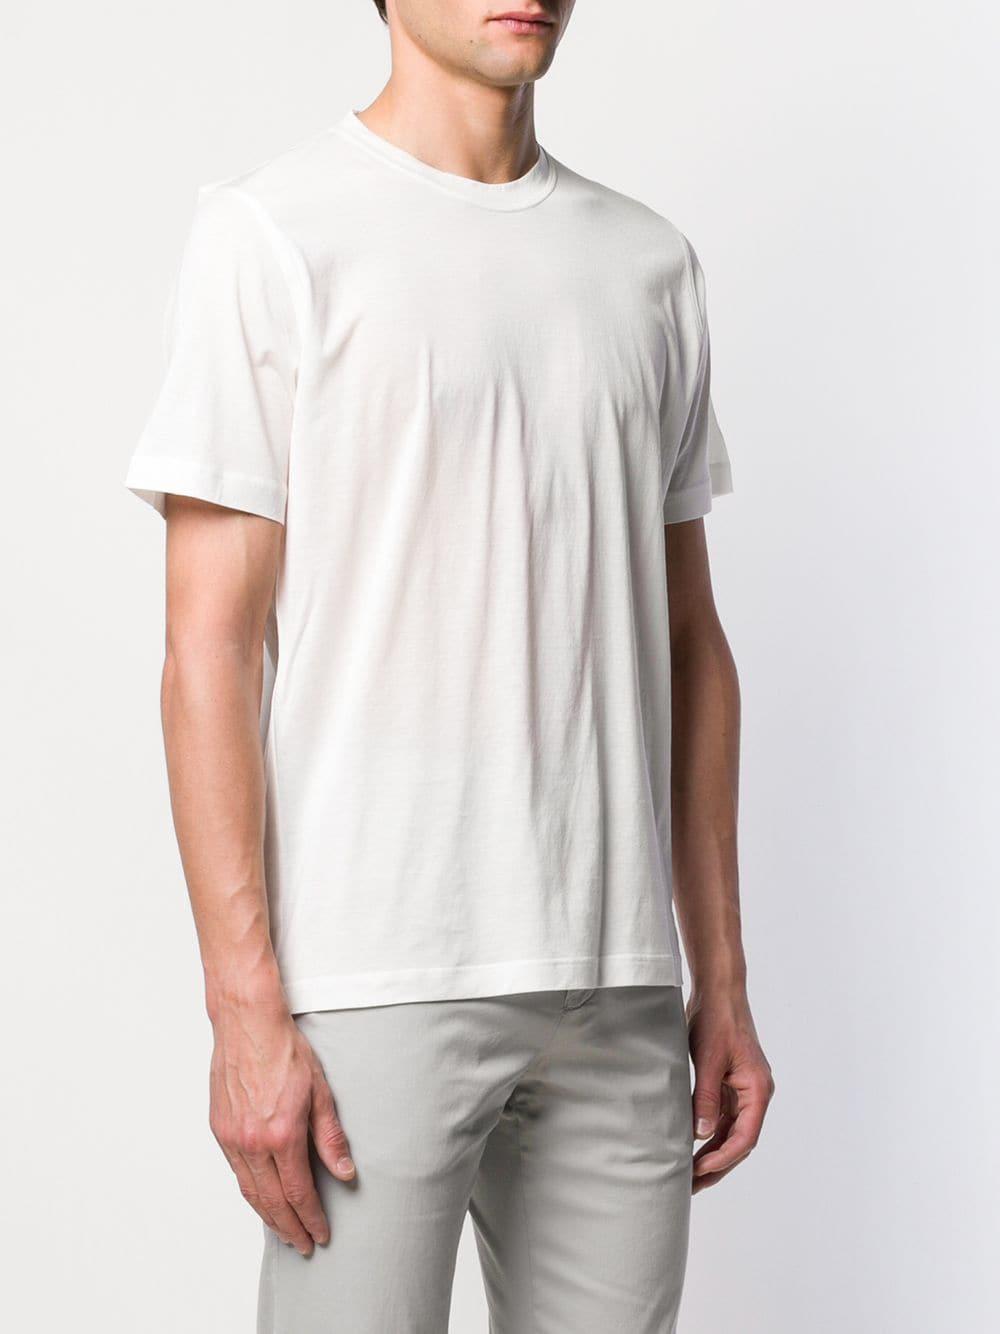 Kiton Cotton Plain T-shirt in White for Men - Lyst